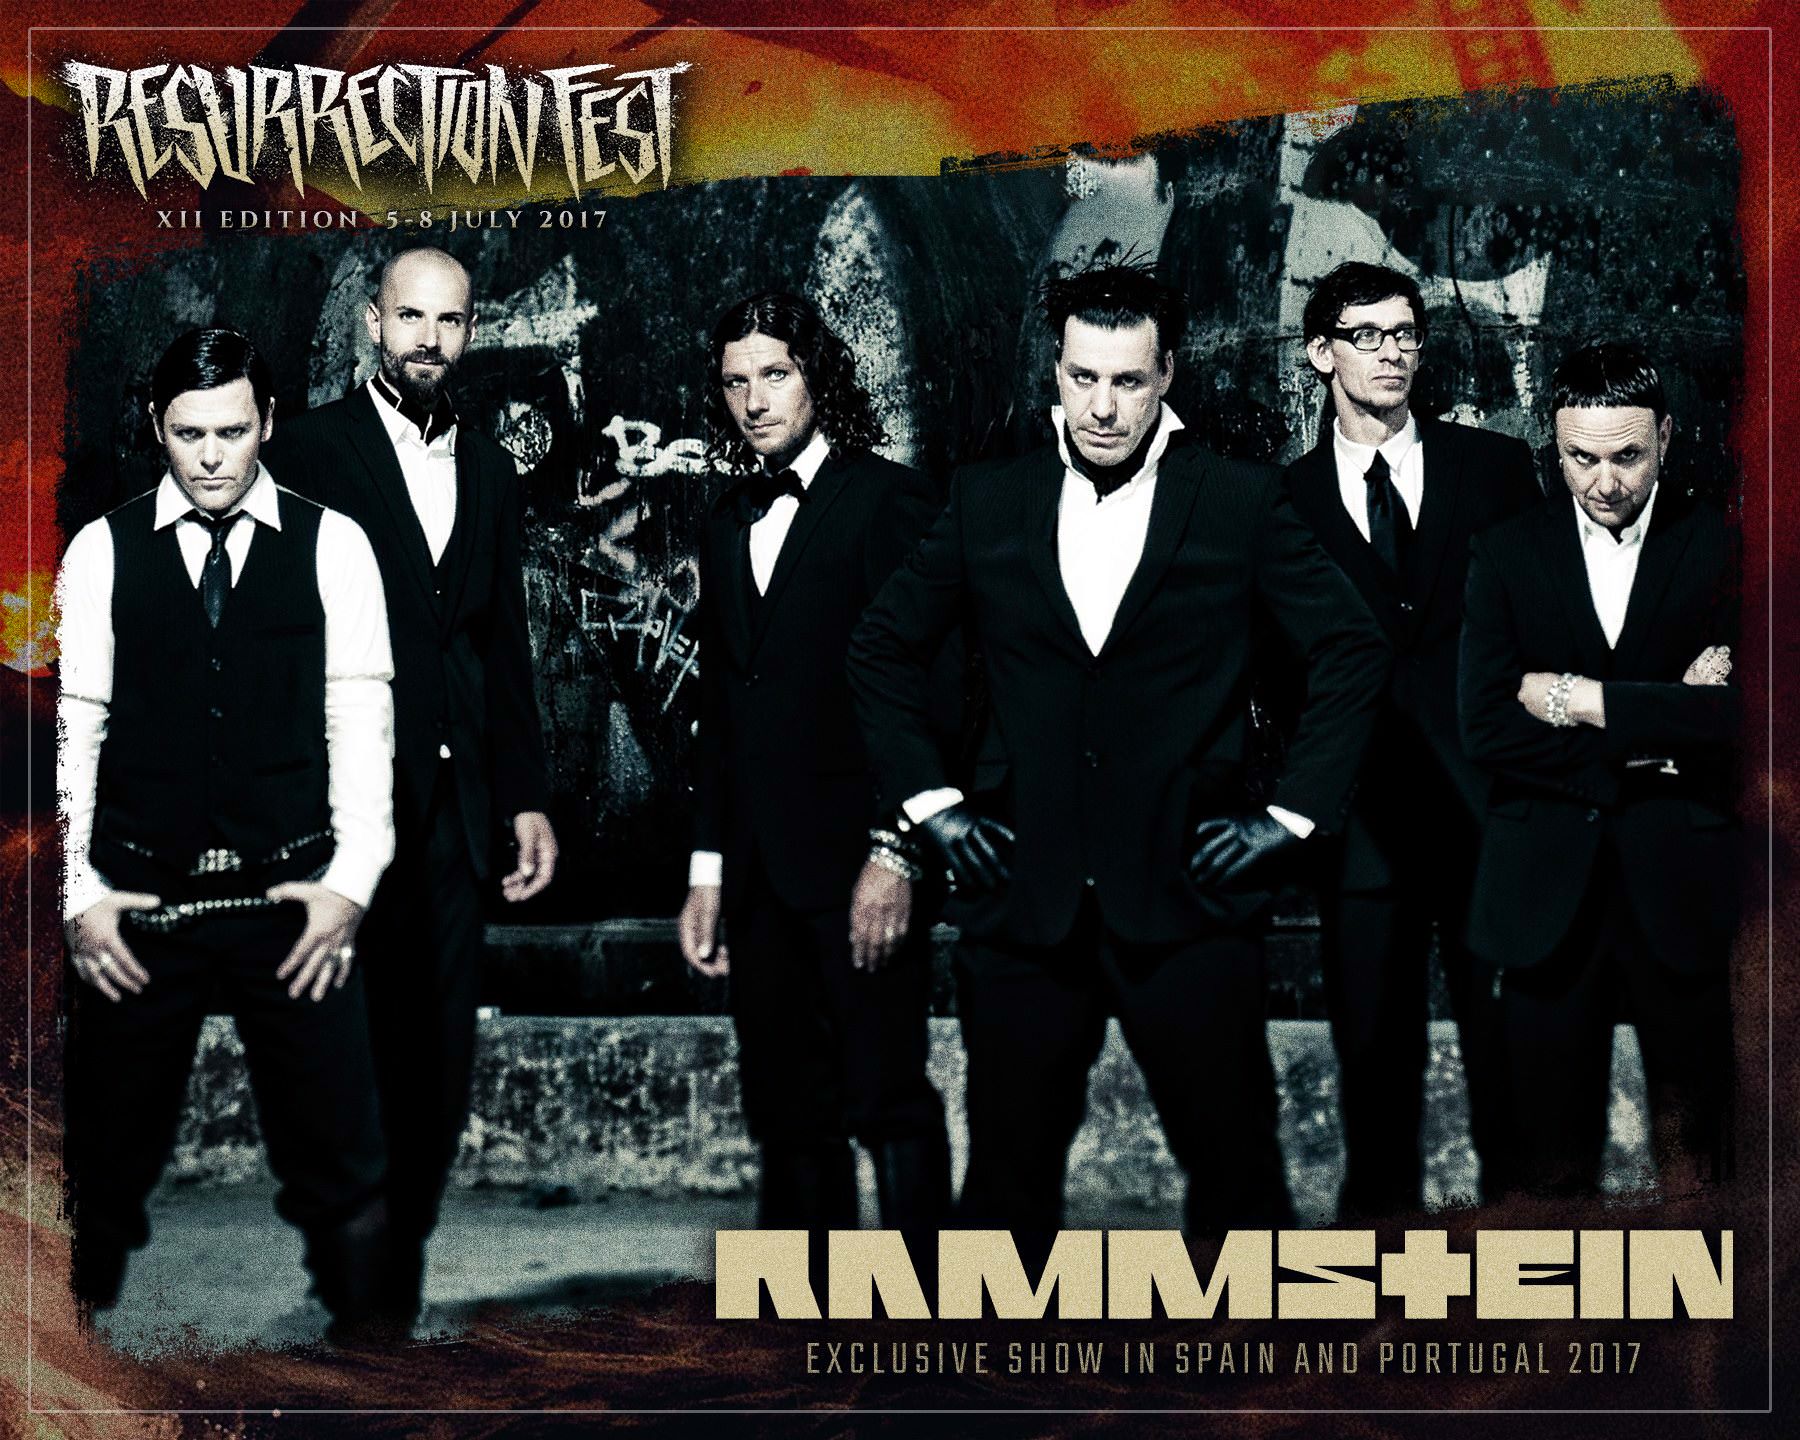 Альбом песен рамштайн. Rammstein. Группа Rammstein. Rammstein обложка. Обложки к группе Rammstein.